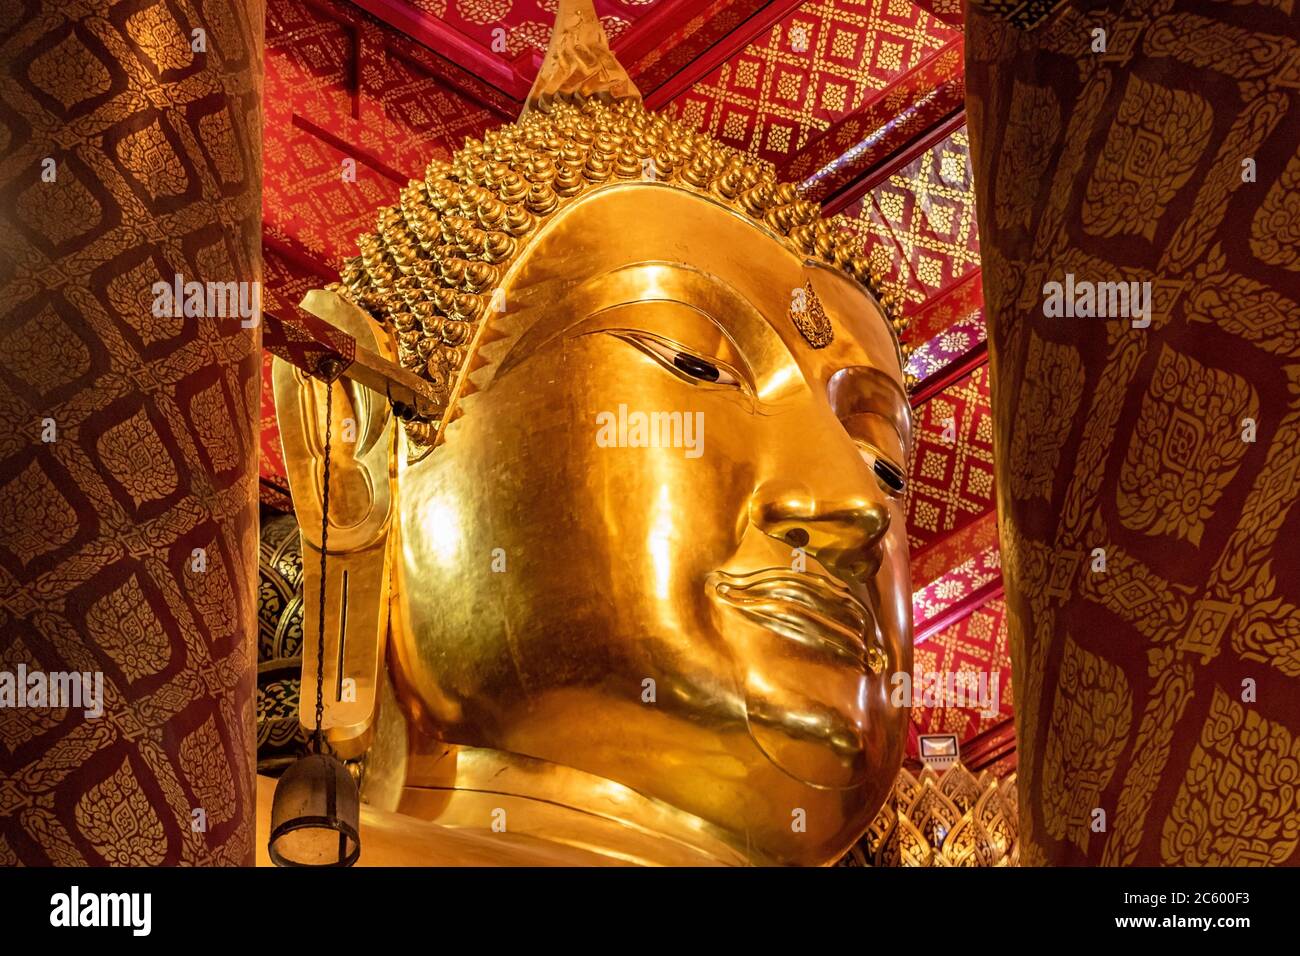 The head of big golden Buddha statute at Buddhist temple - Wat Phanan Choeng Worawihan, Ayutthaya Thailand. Stock Photo